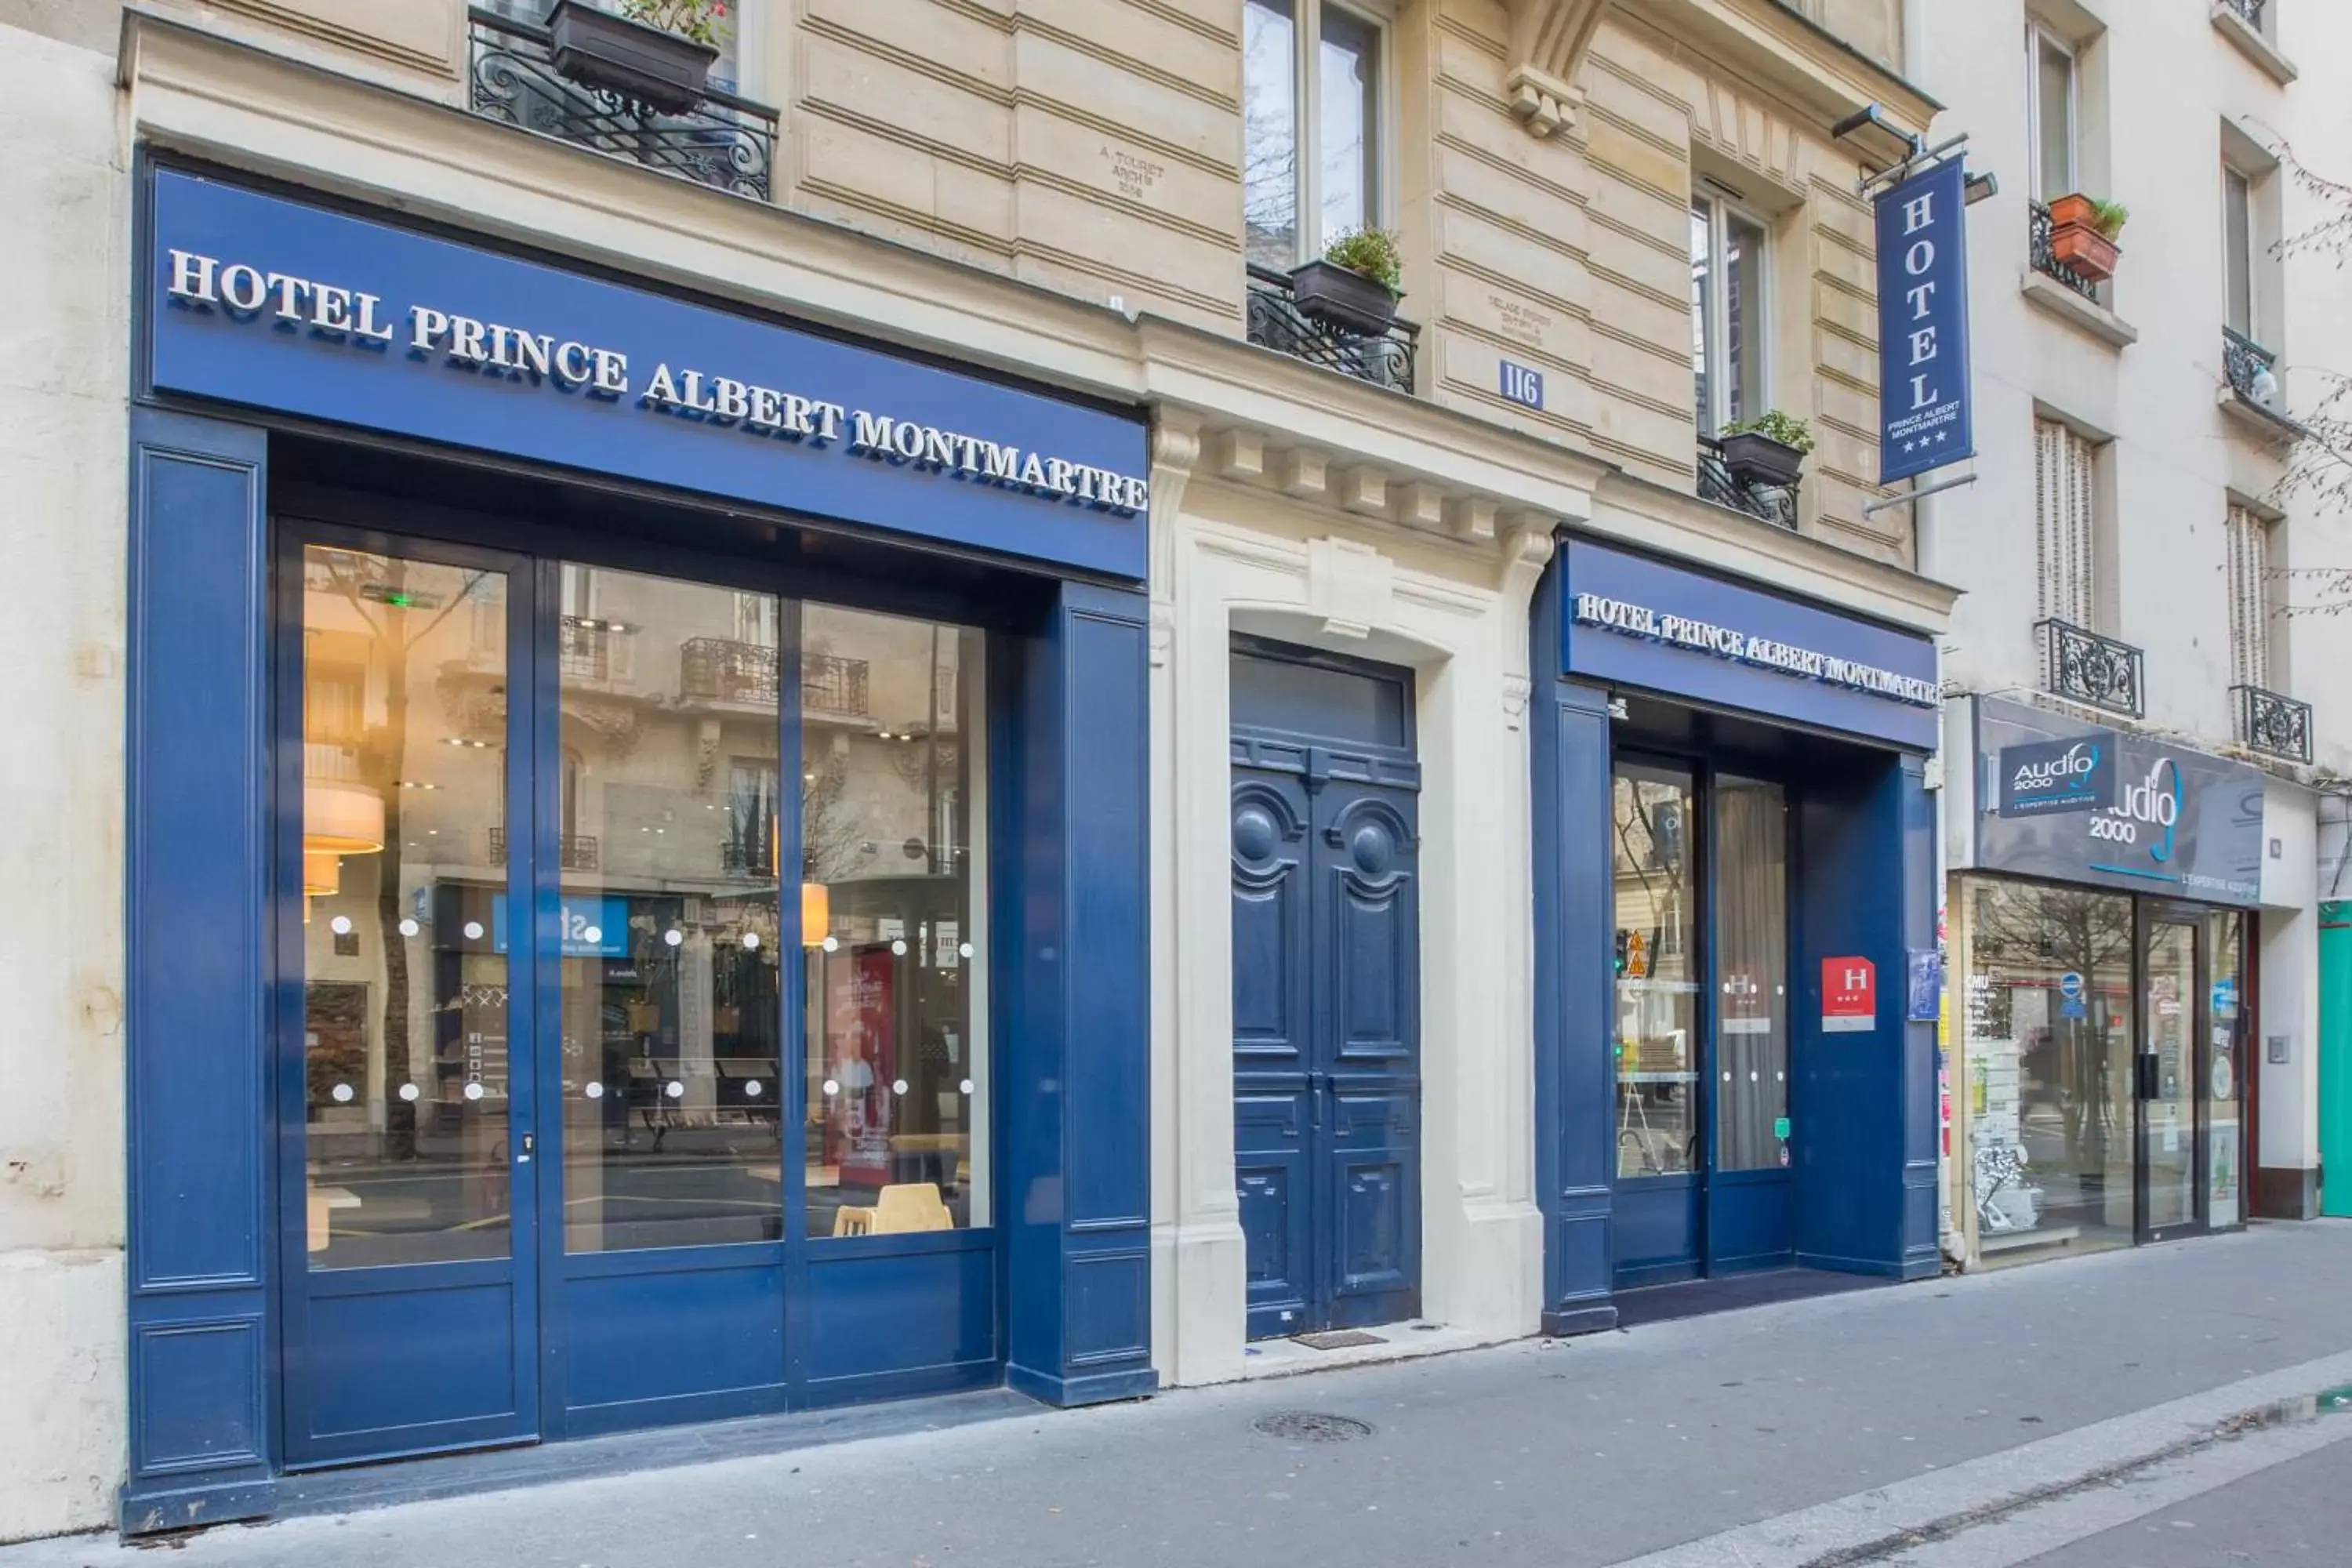 Facade/entrance in Prince Albert Montmartre